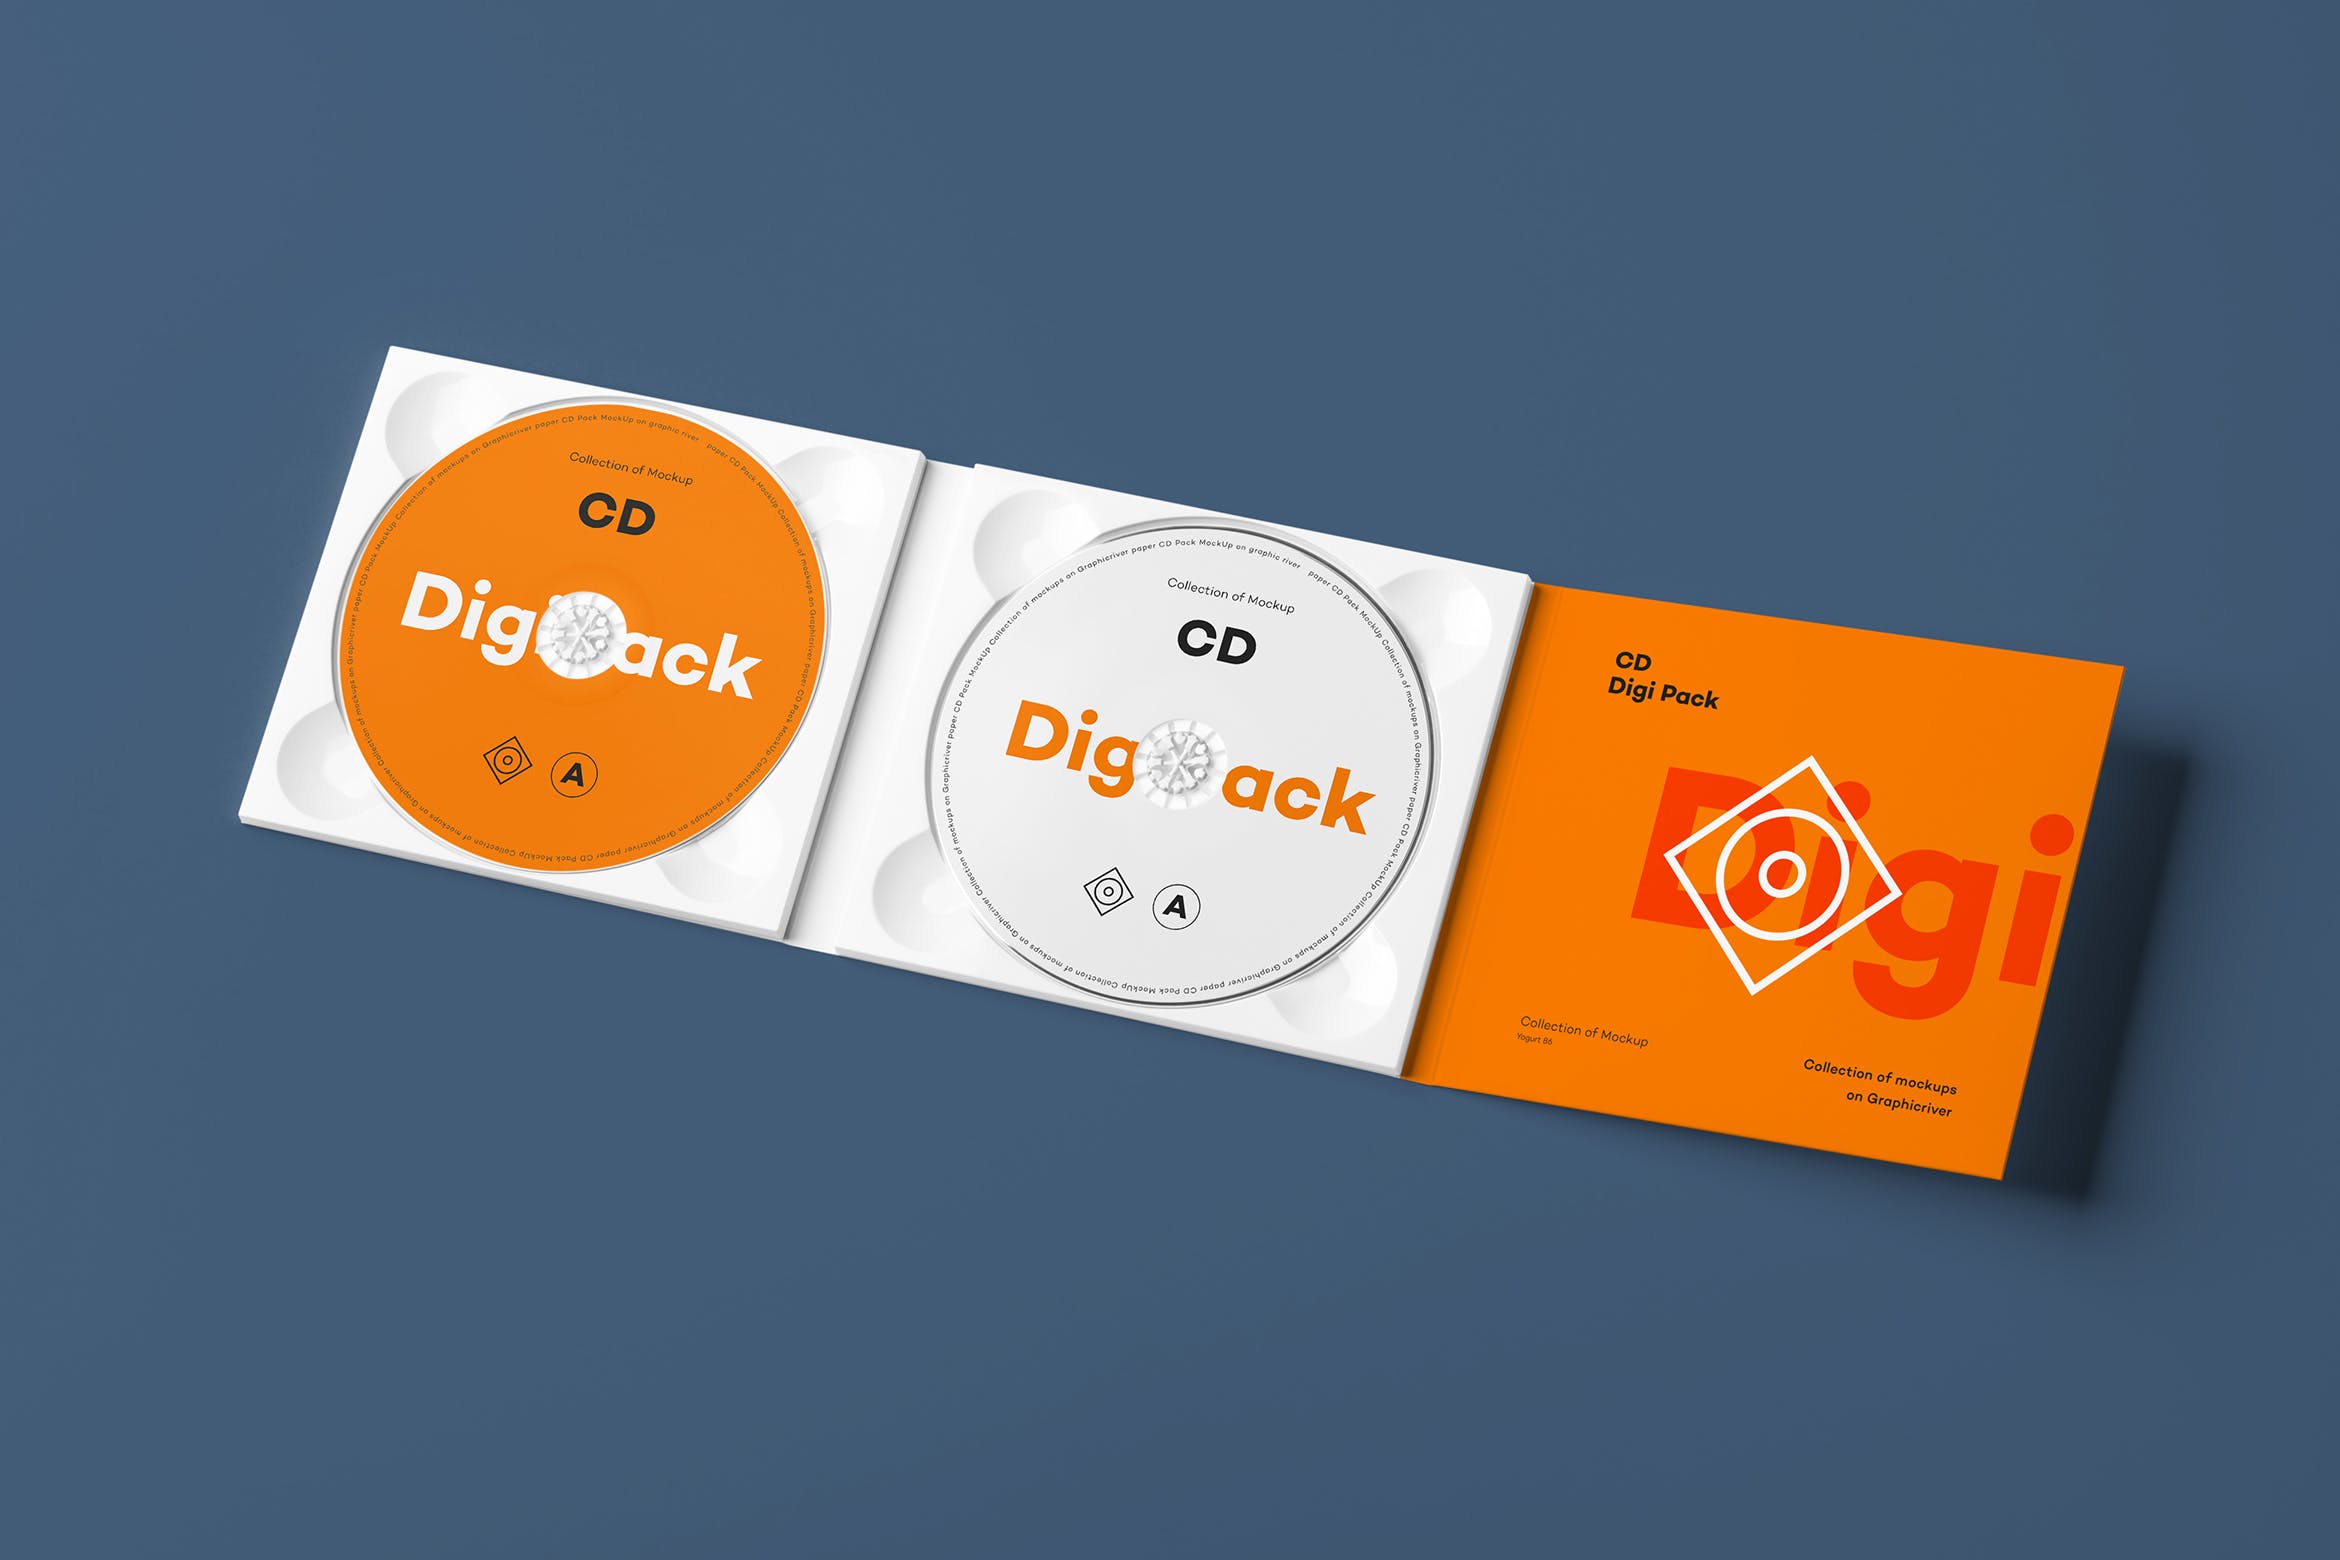 CD光碟封面&包装盒设计图蚂蚁素材精选模板v8 CD Digi Pack Mock-up 8插图